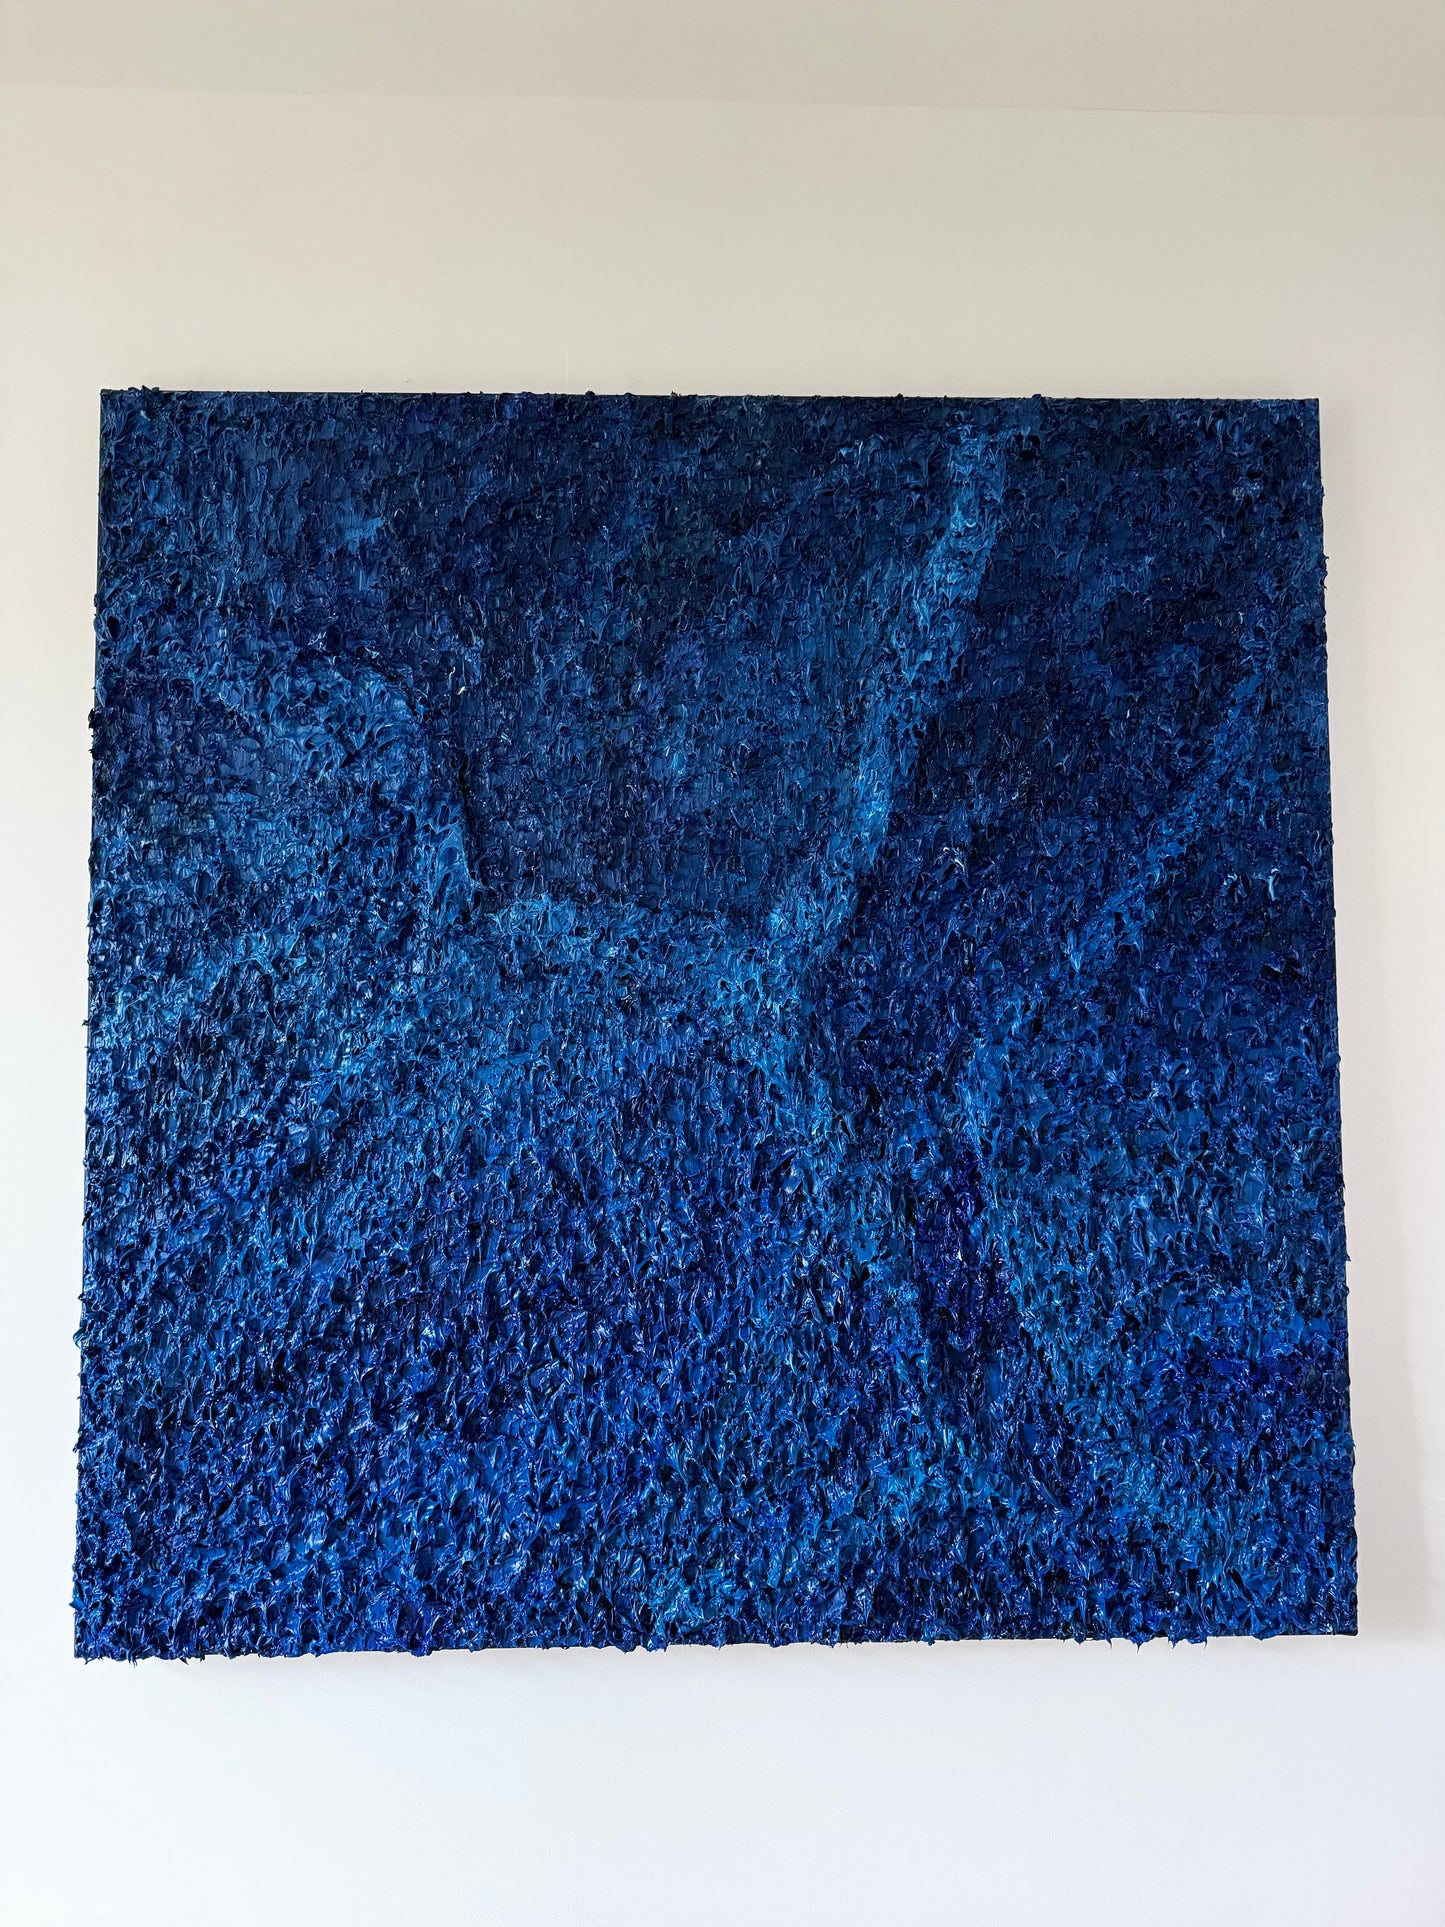 Blue Ocean series “Line” - eļļas glezna, 100x100cm